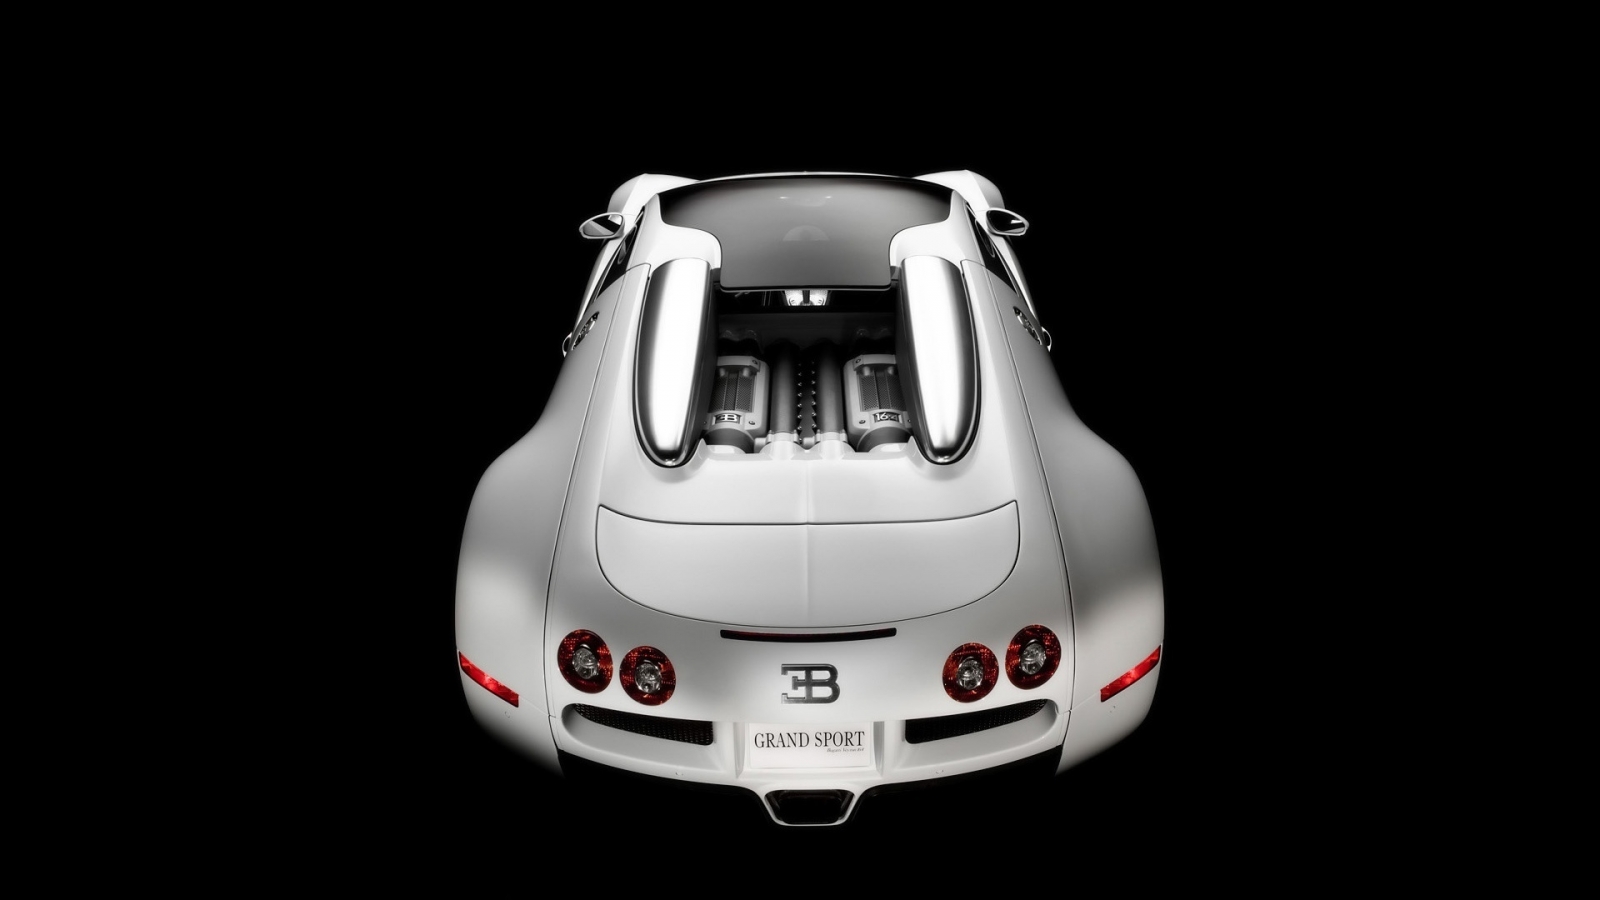 Bugatti Veyron 16.4 Grand Sport Production Version 2009 - Studio Rear Top for 1600 x 900 HDTV resolution